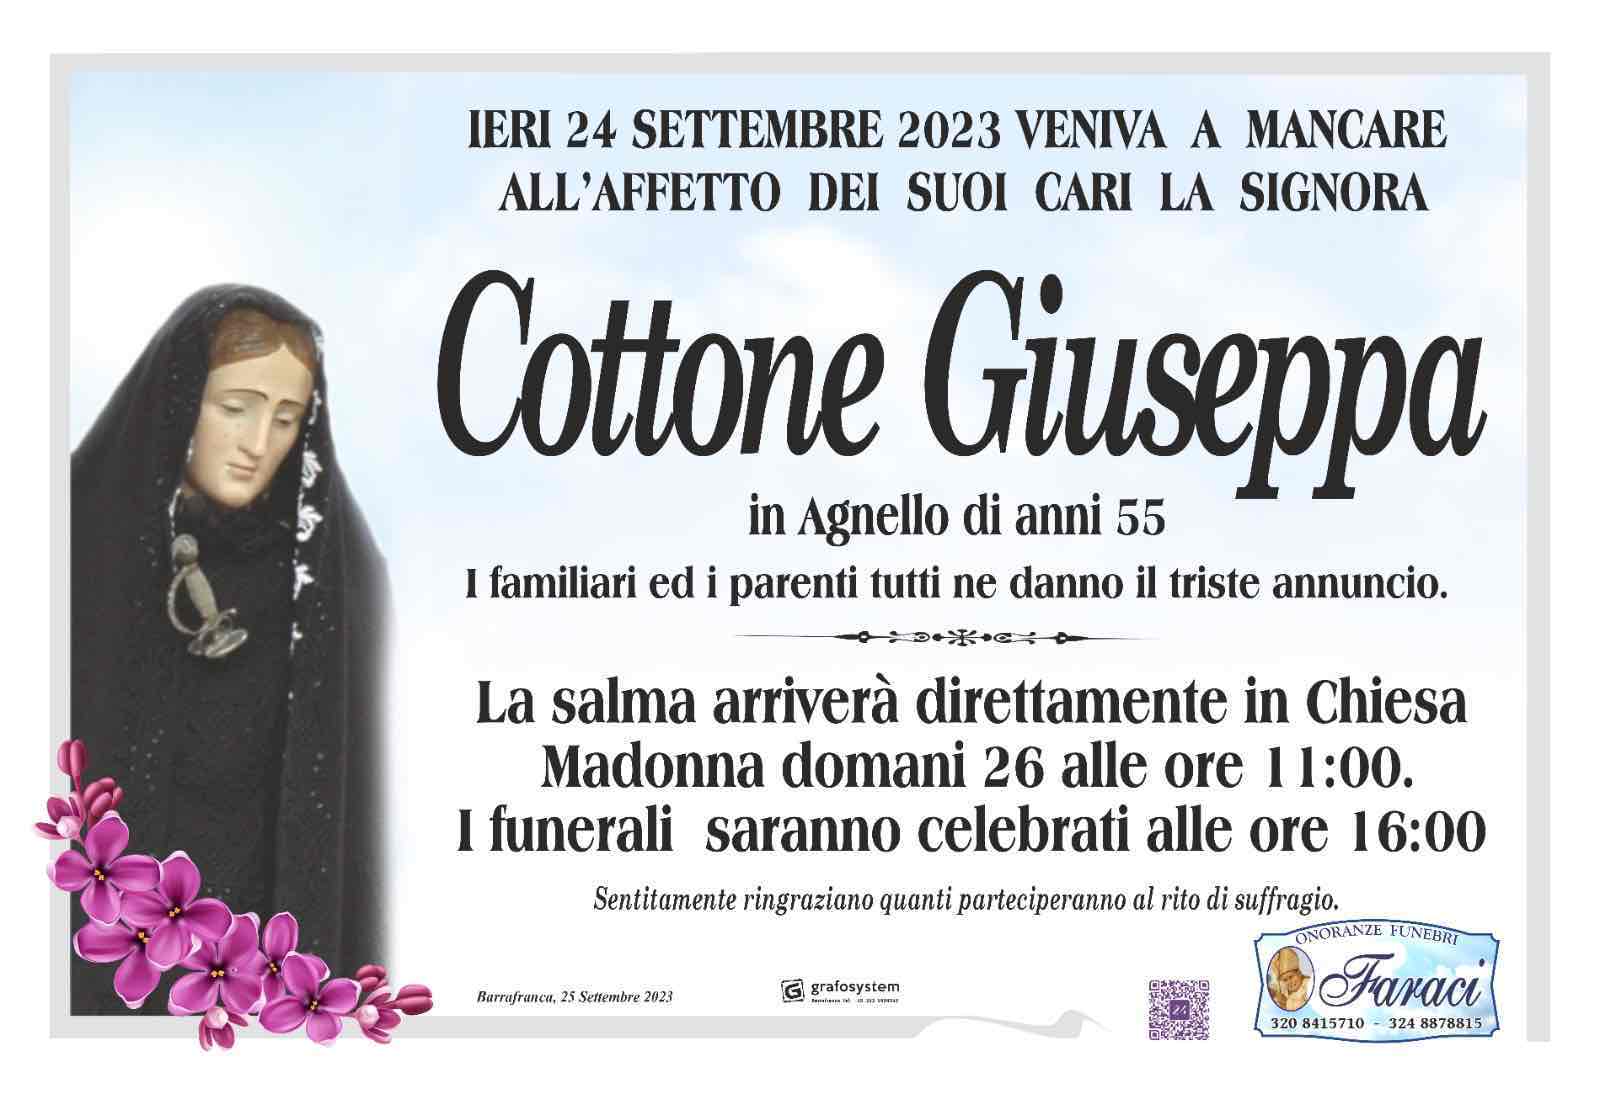 Giuseppa Cottone